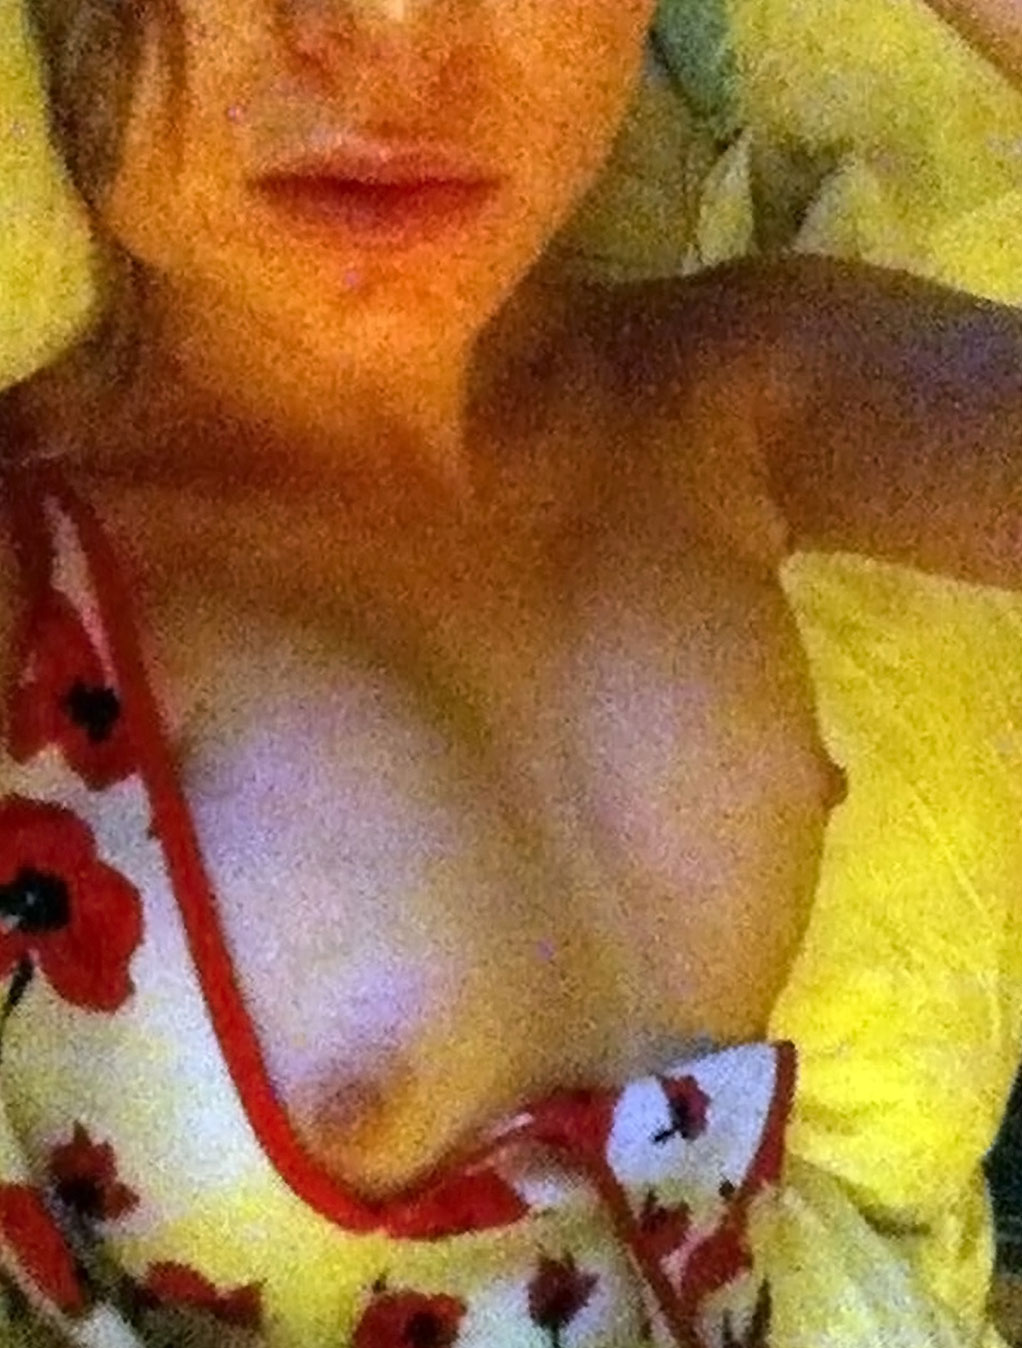 Brie Larson Nude LEAKED Pics.